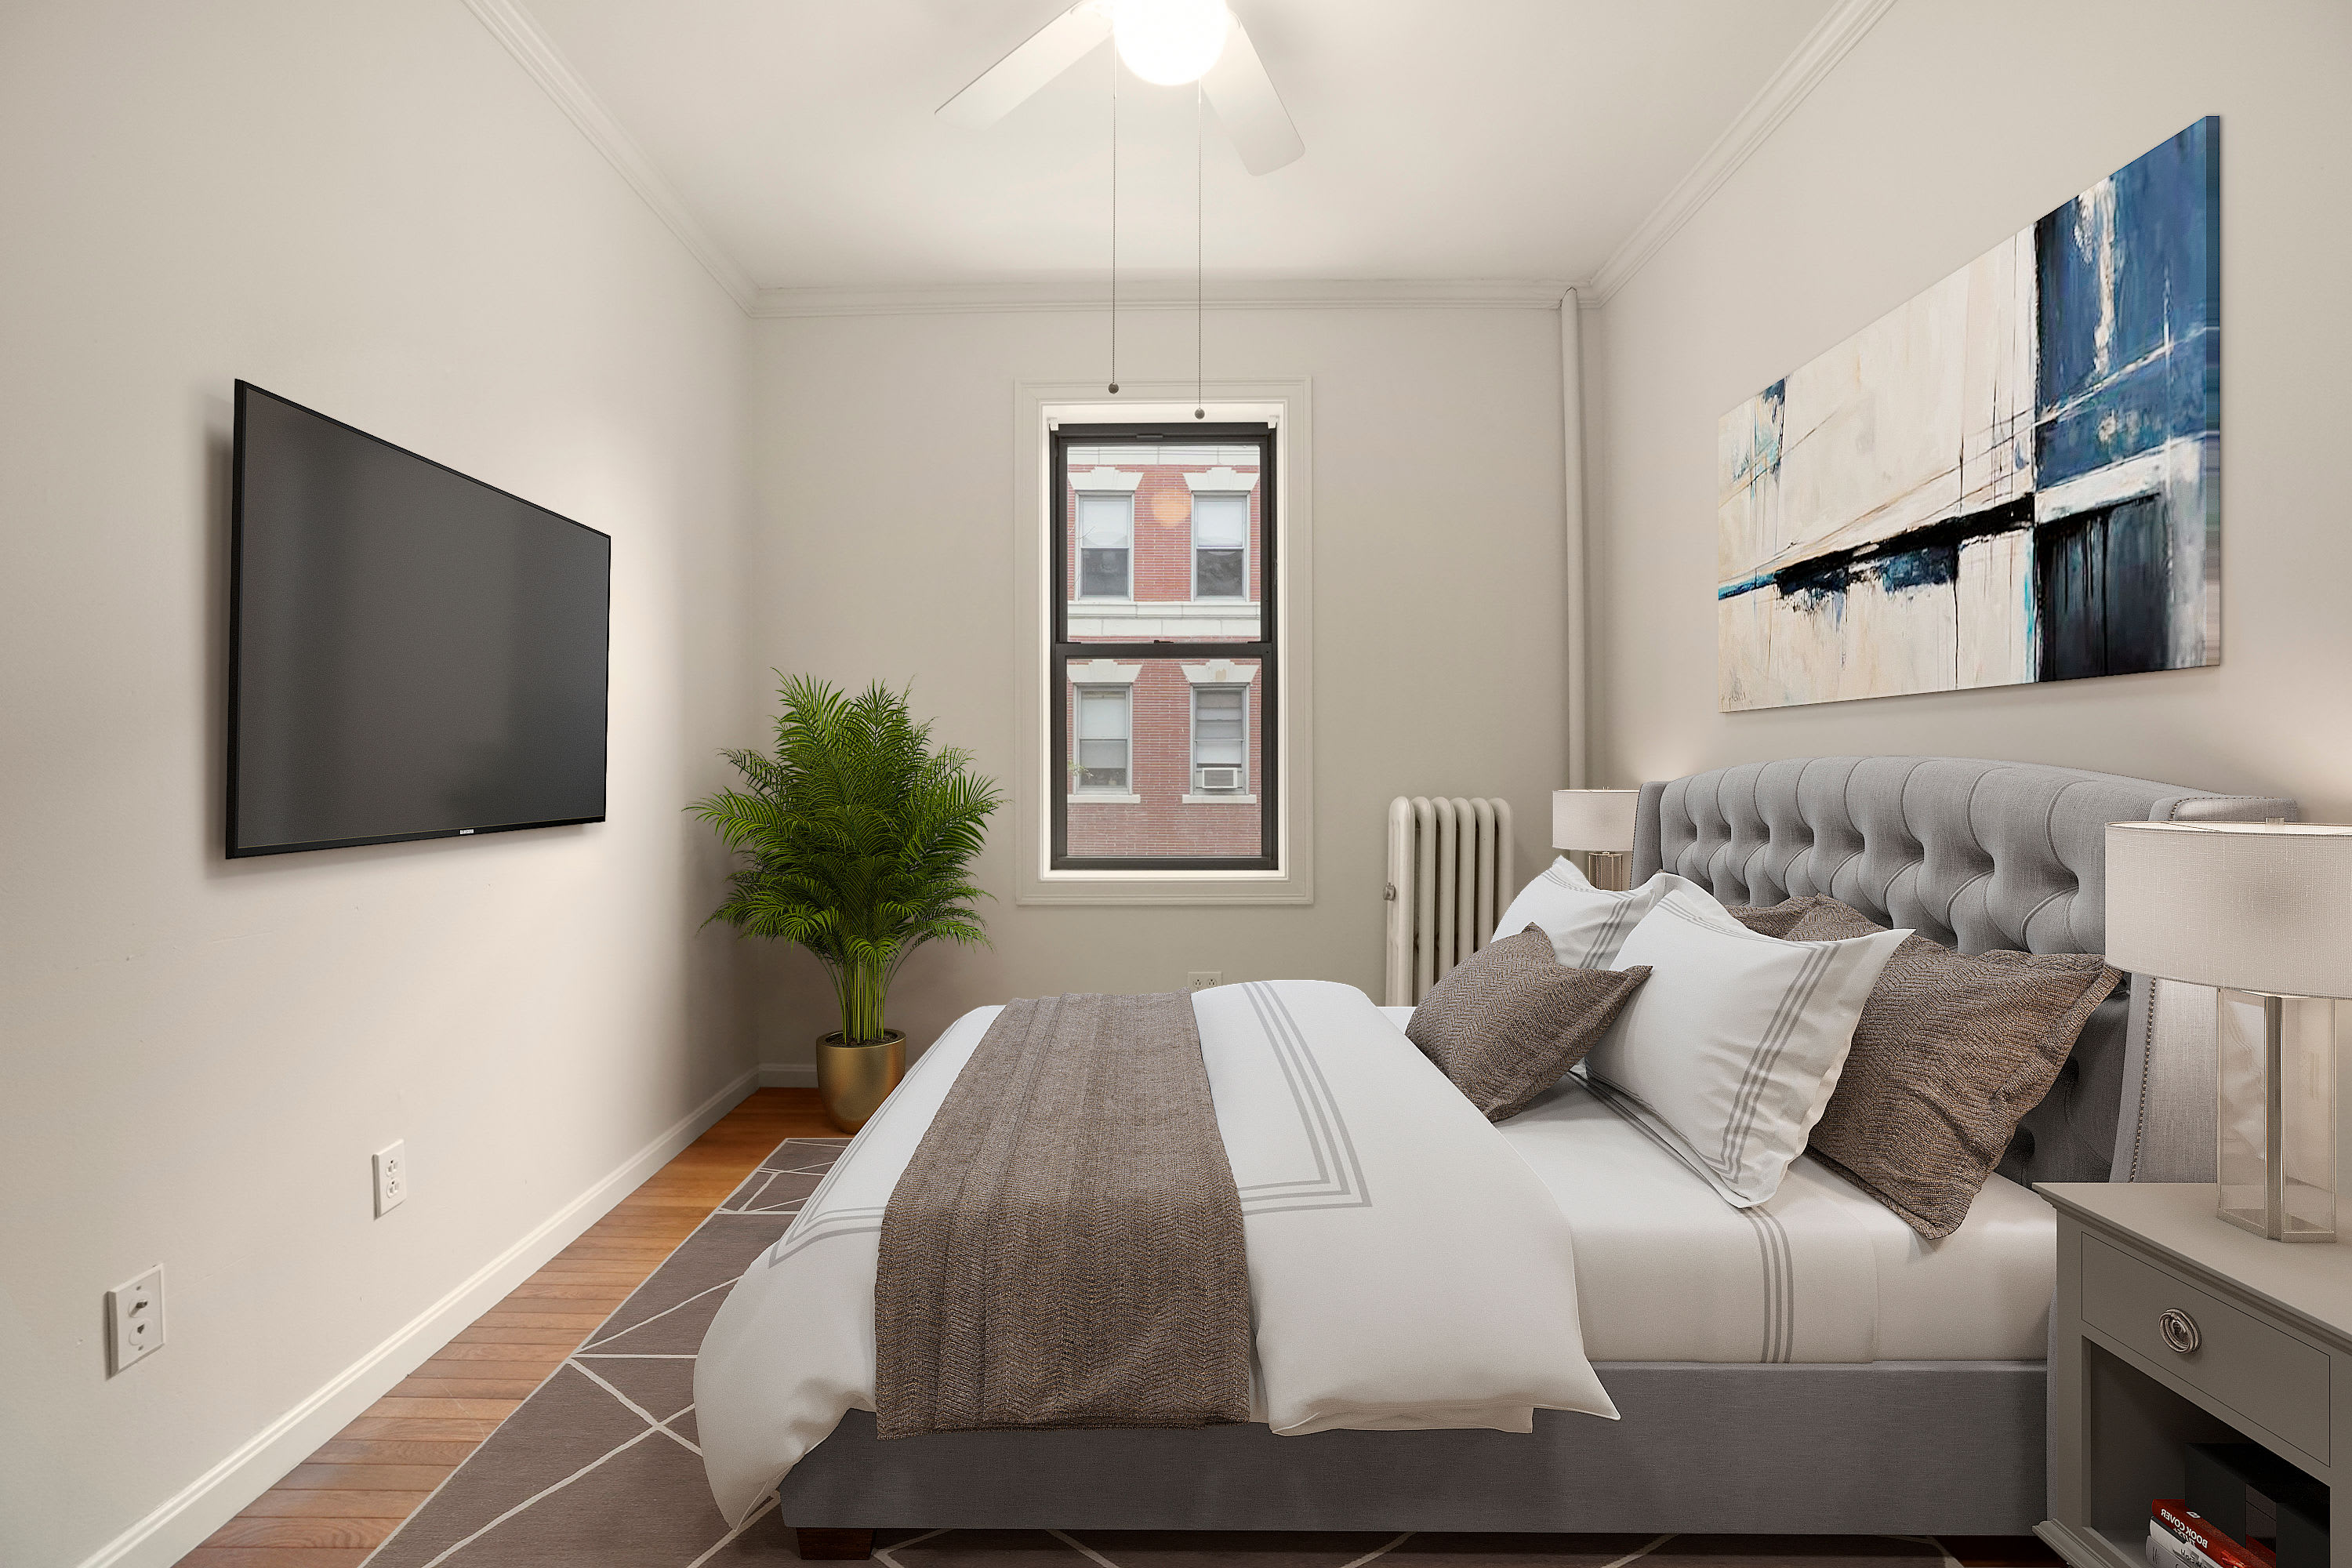 Studio, 1 & 2 Bedroom Apartments for Rent in Boston, MA